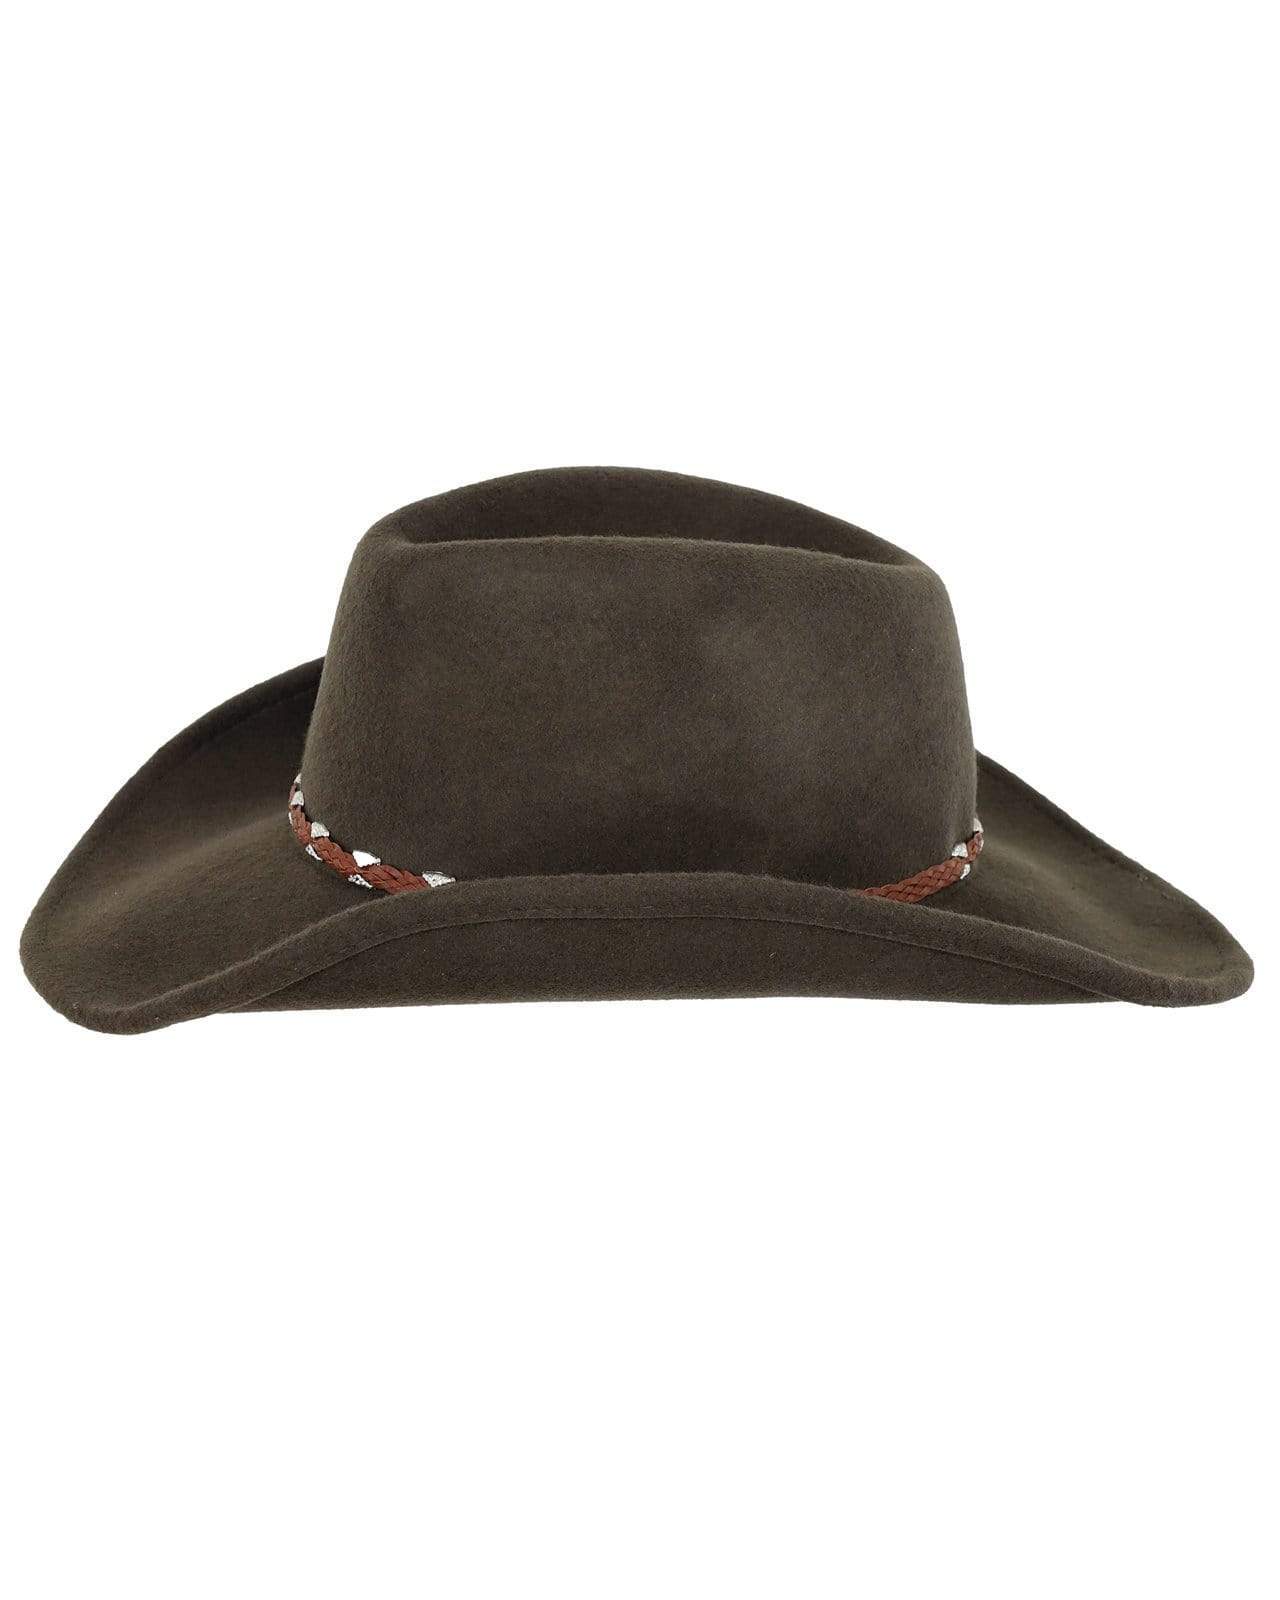 Outback Trading Company Wallaby Hats